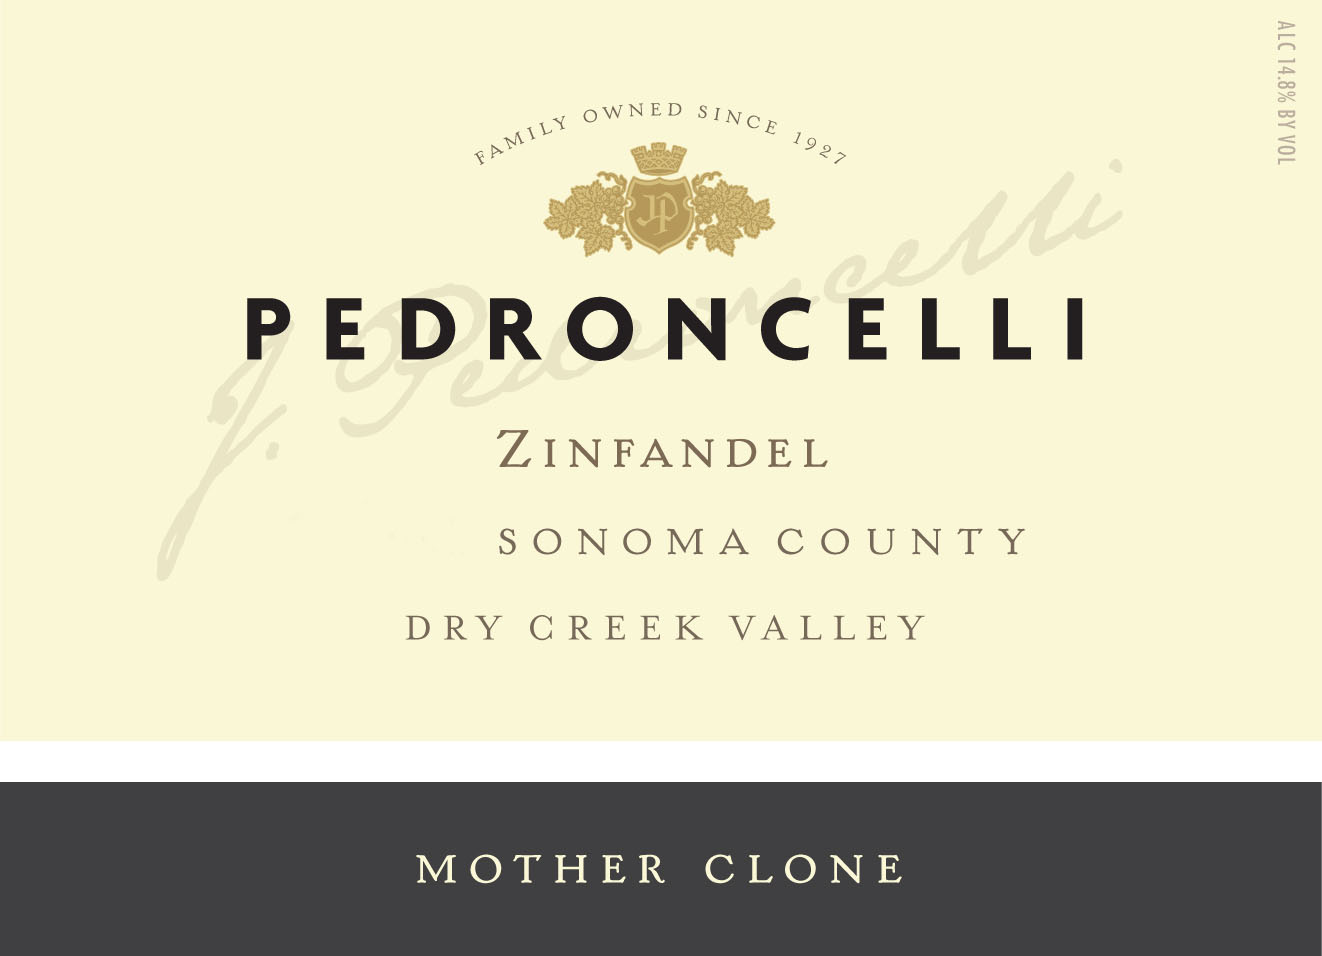 Pedroncelli - Zinfandel - Mother Clone label